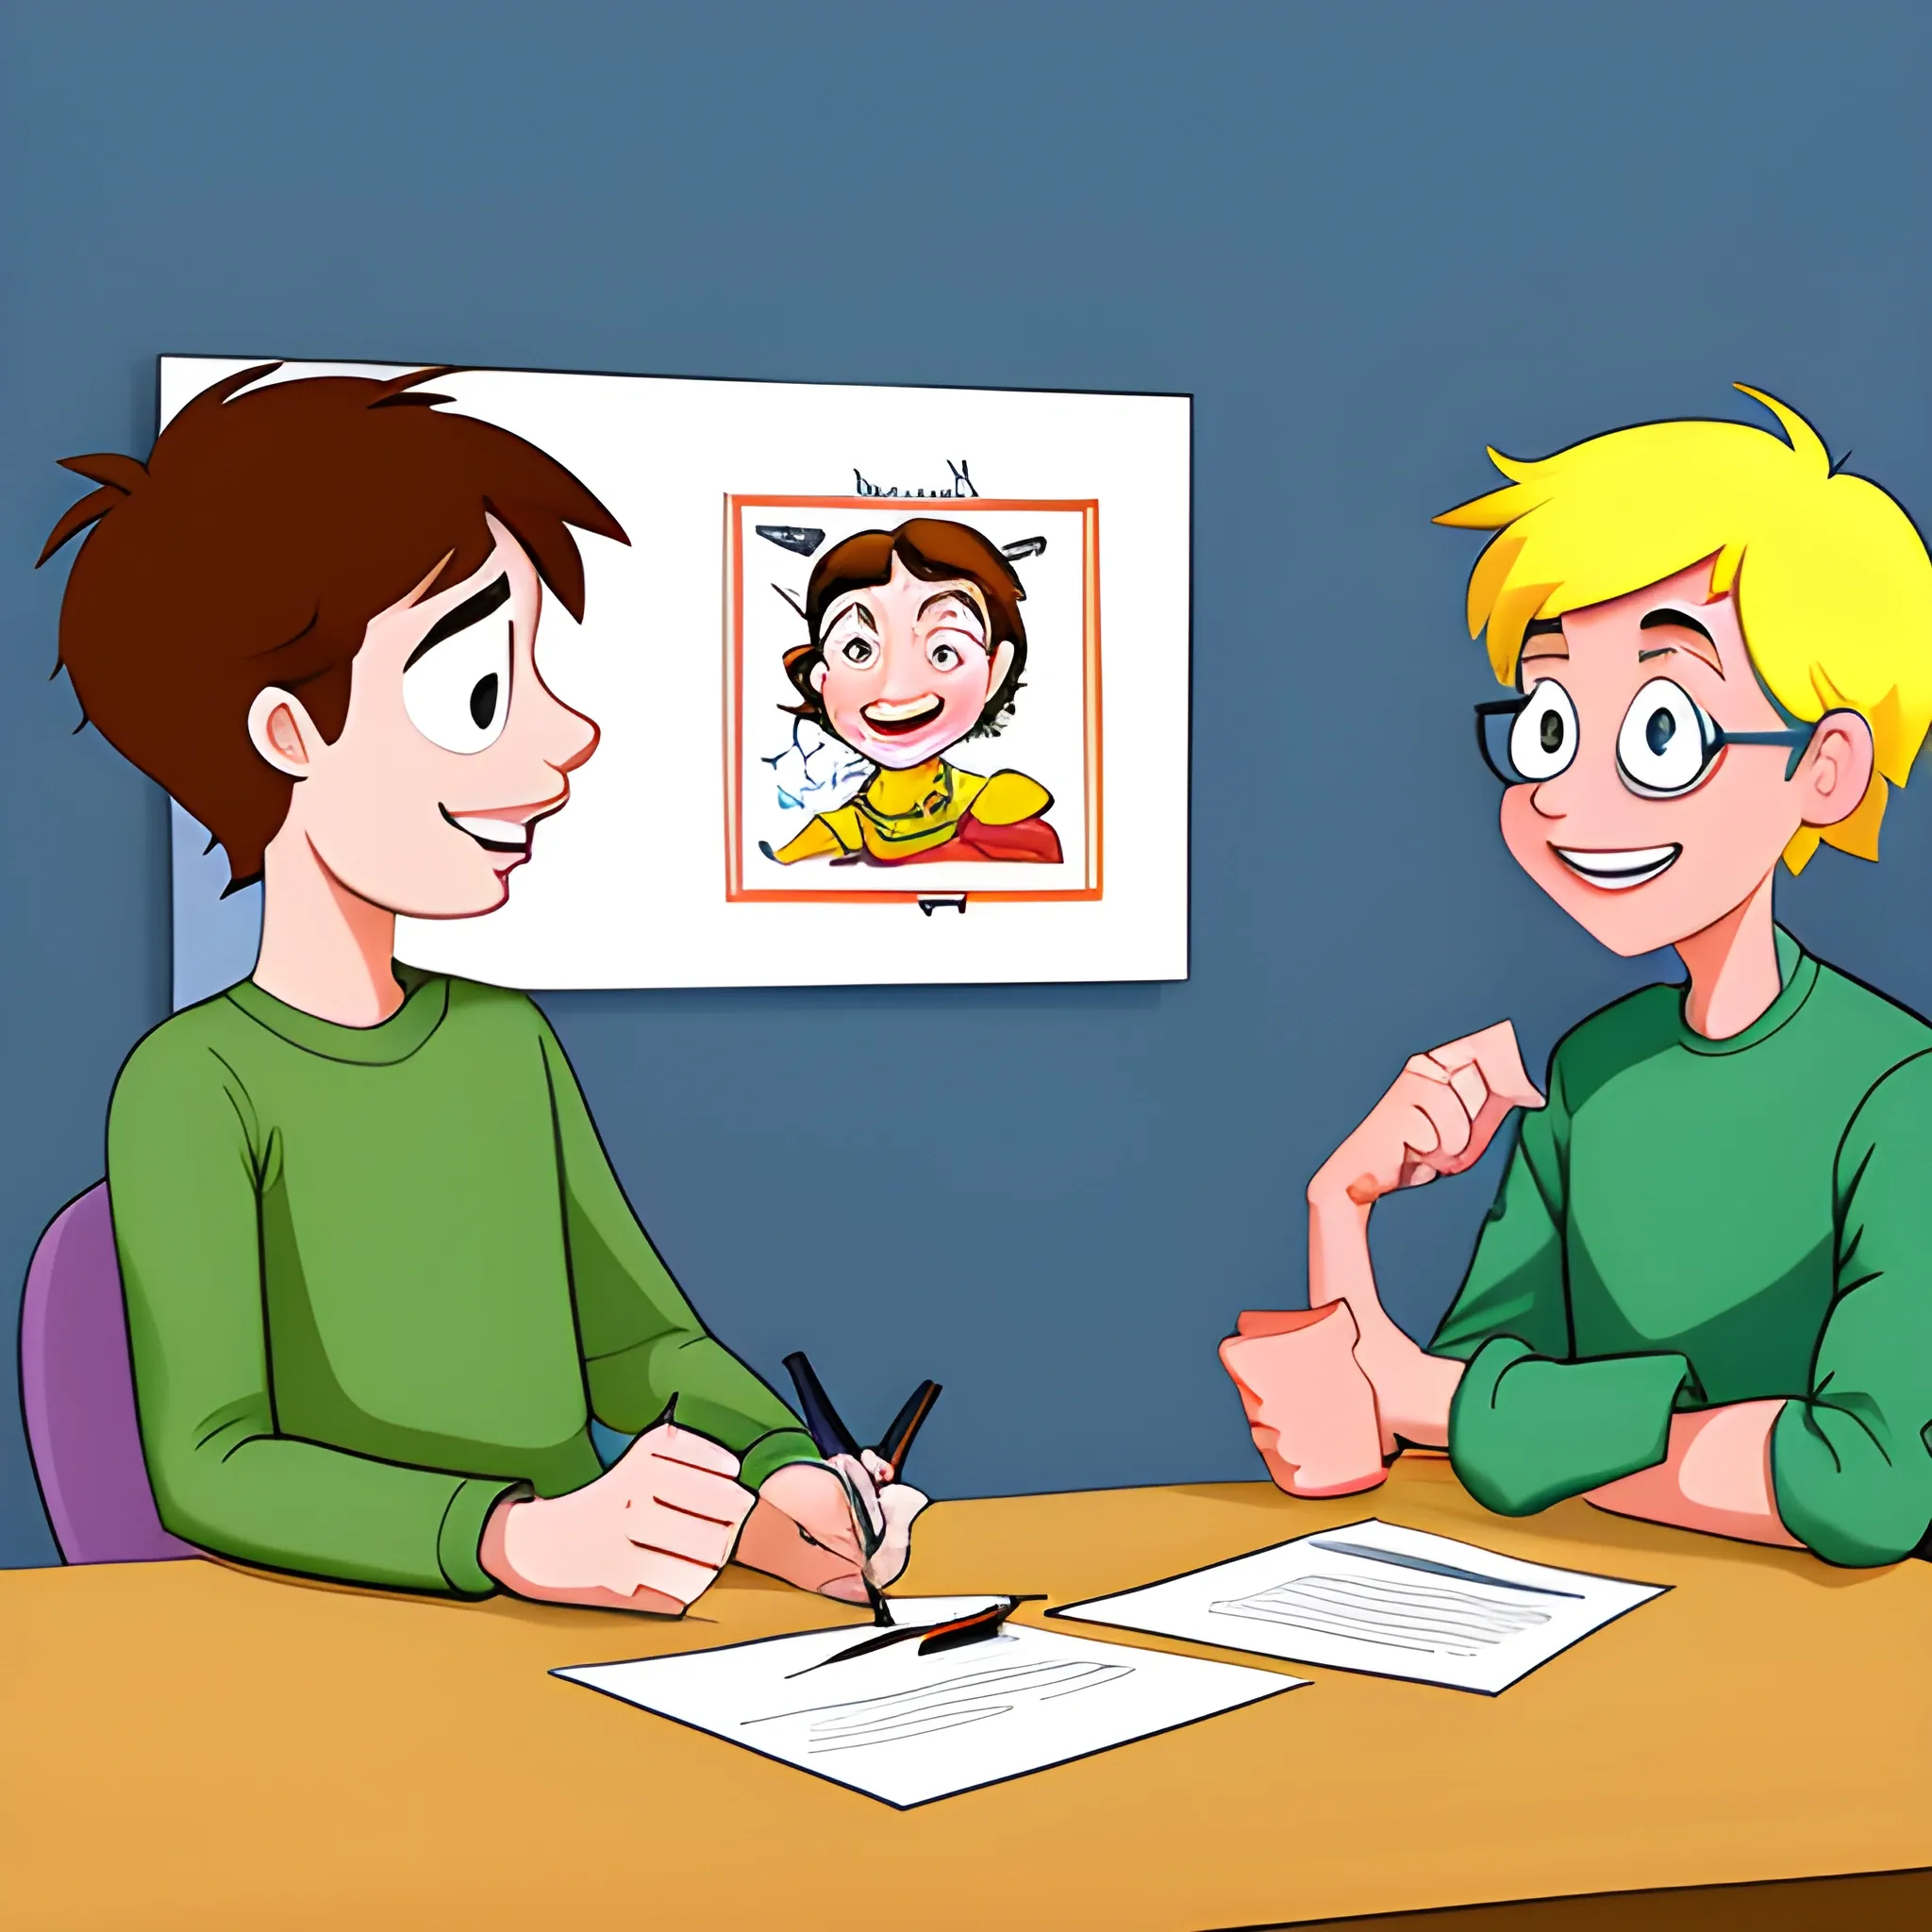 cartoon mentoring session between two people

, Cartoon